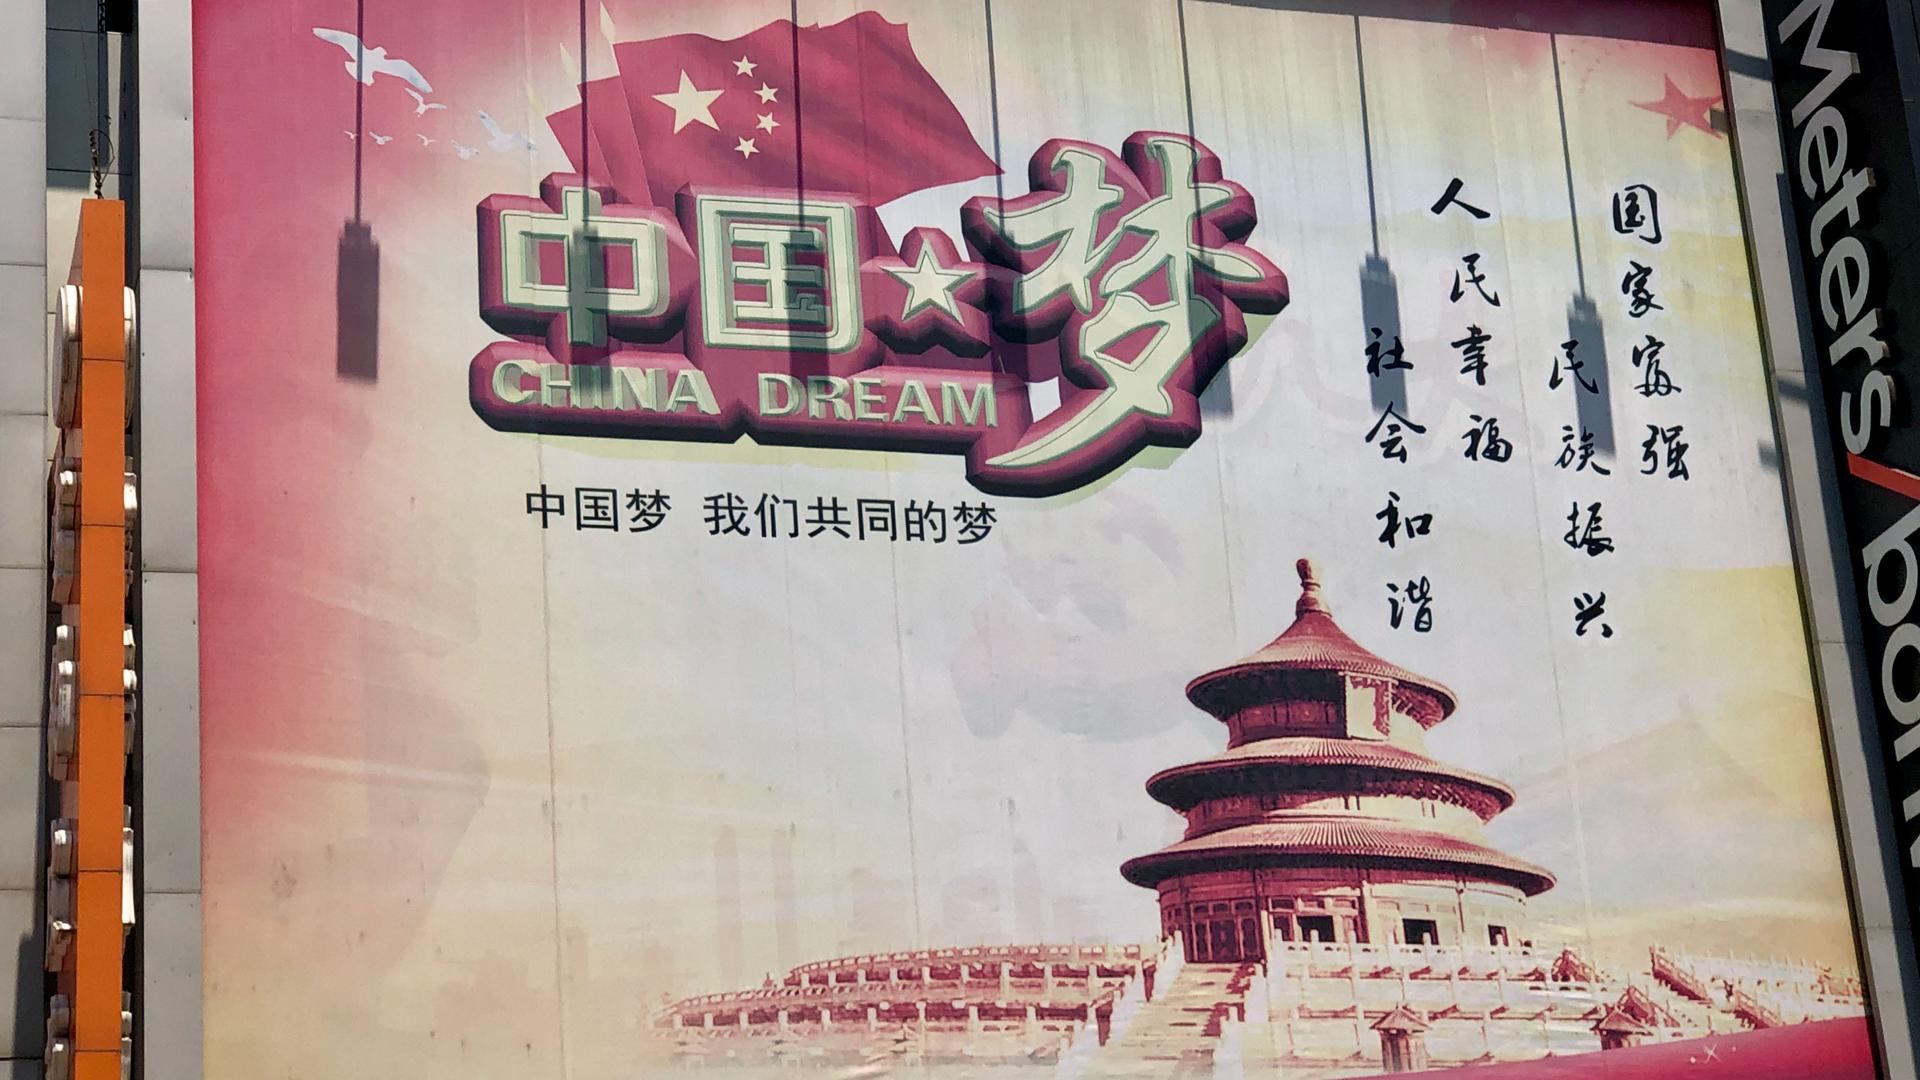 A billboard advertising the "China dream" in Chengdu, China, in June 2019.